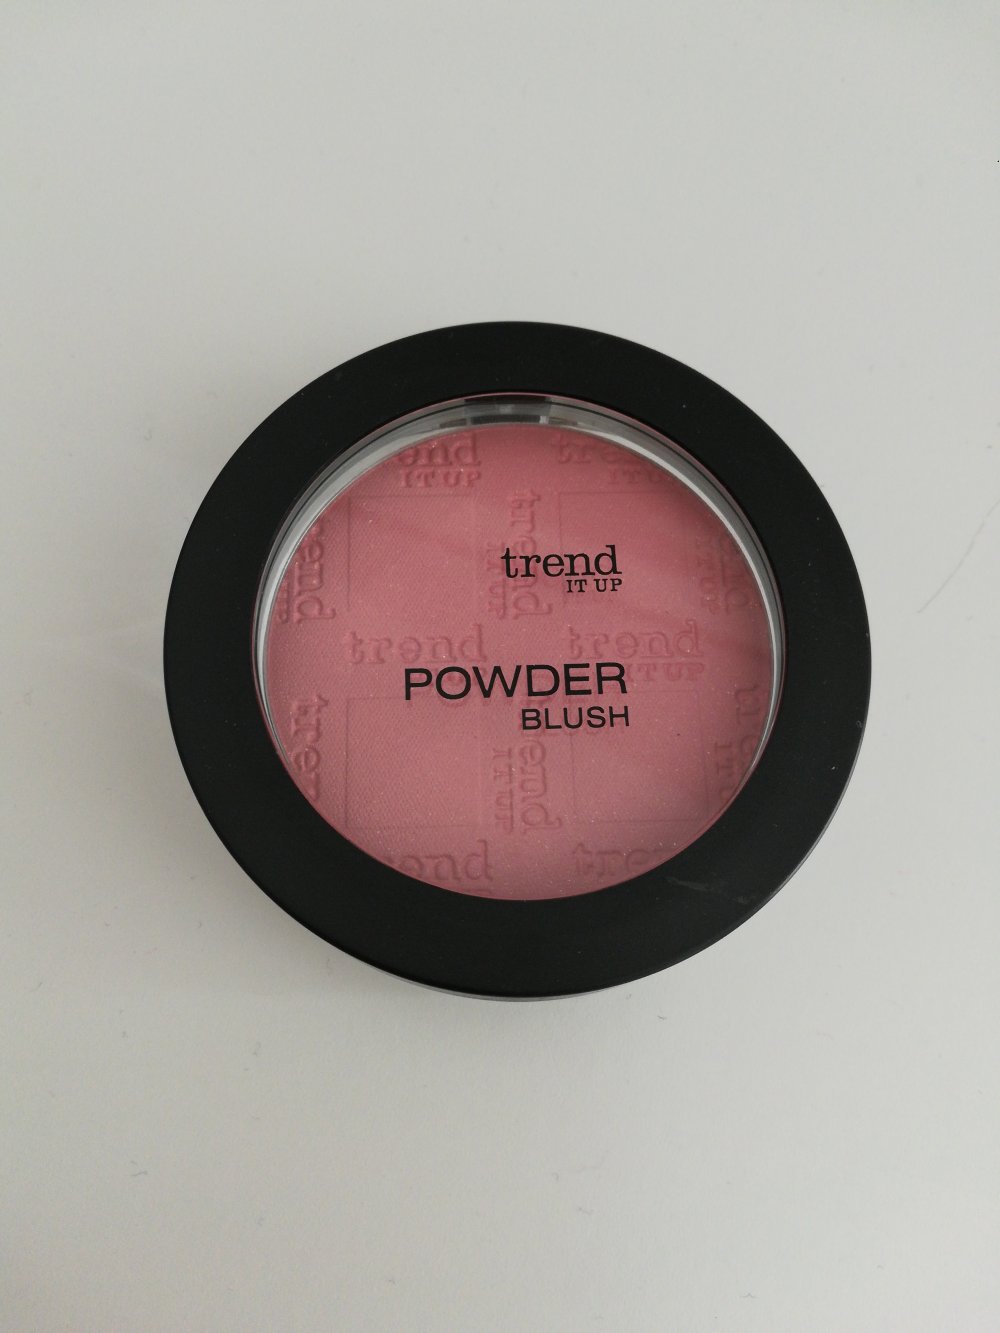 Trend it up powder blush 015 